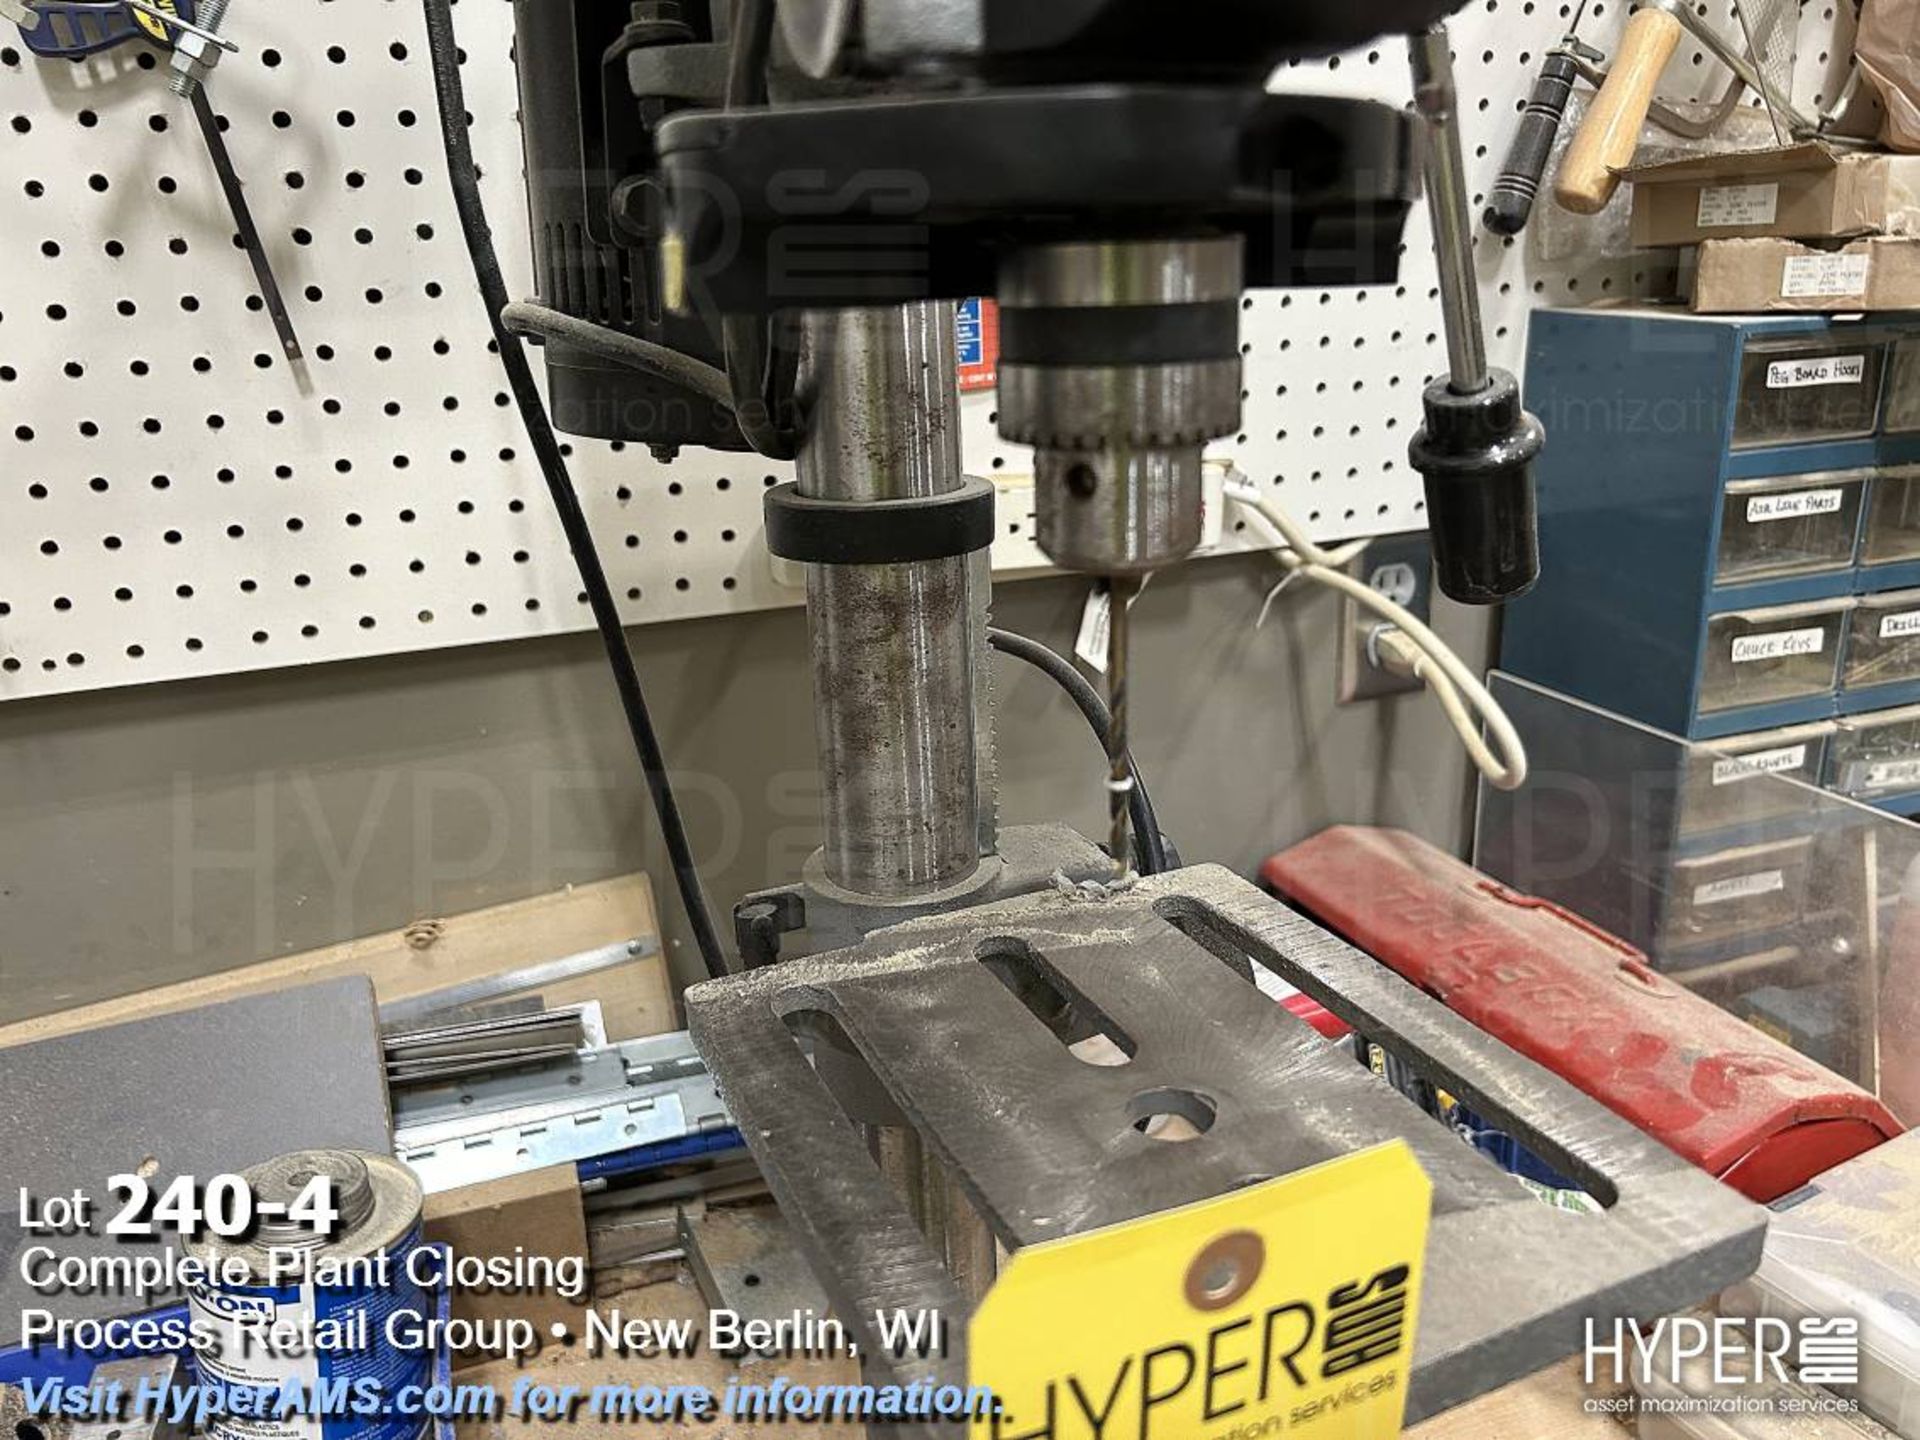 Craftsman 2/3hp bench top drill press - Image 4 of 4